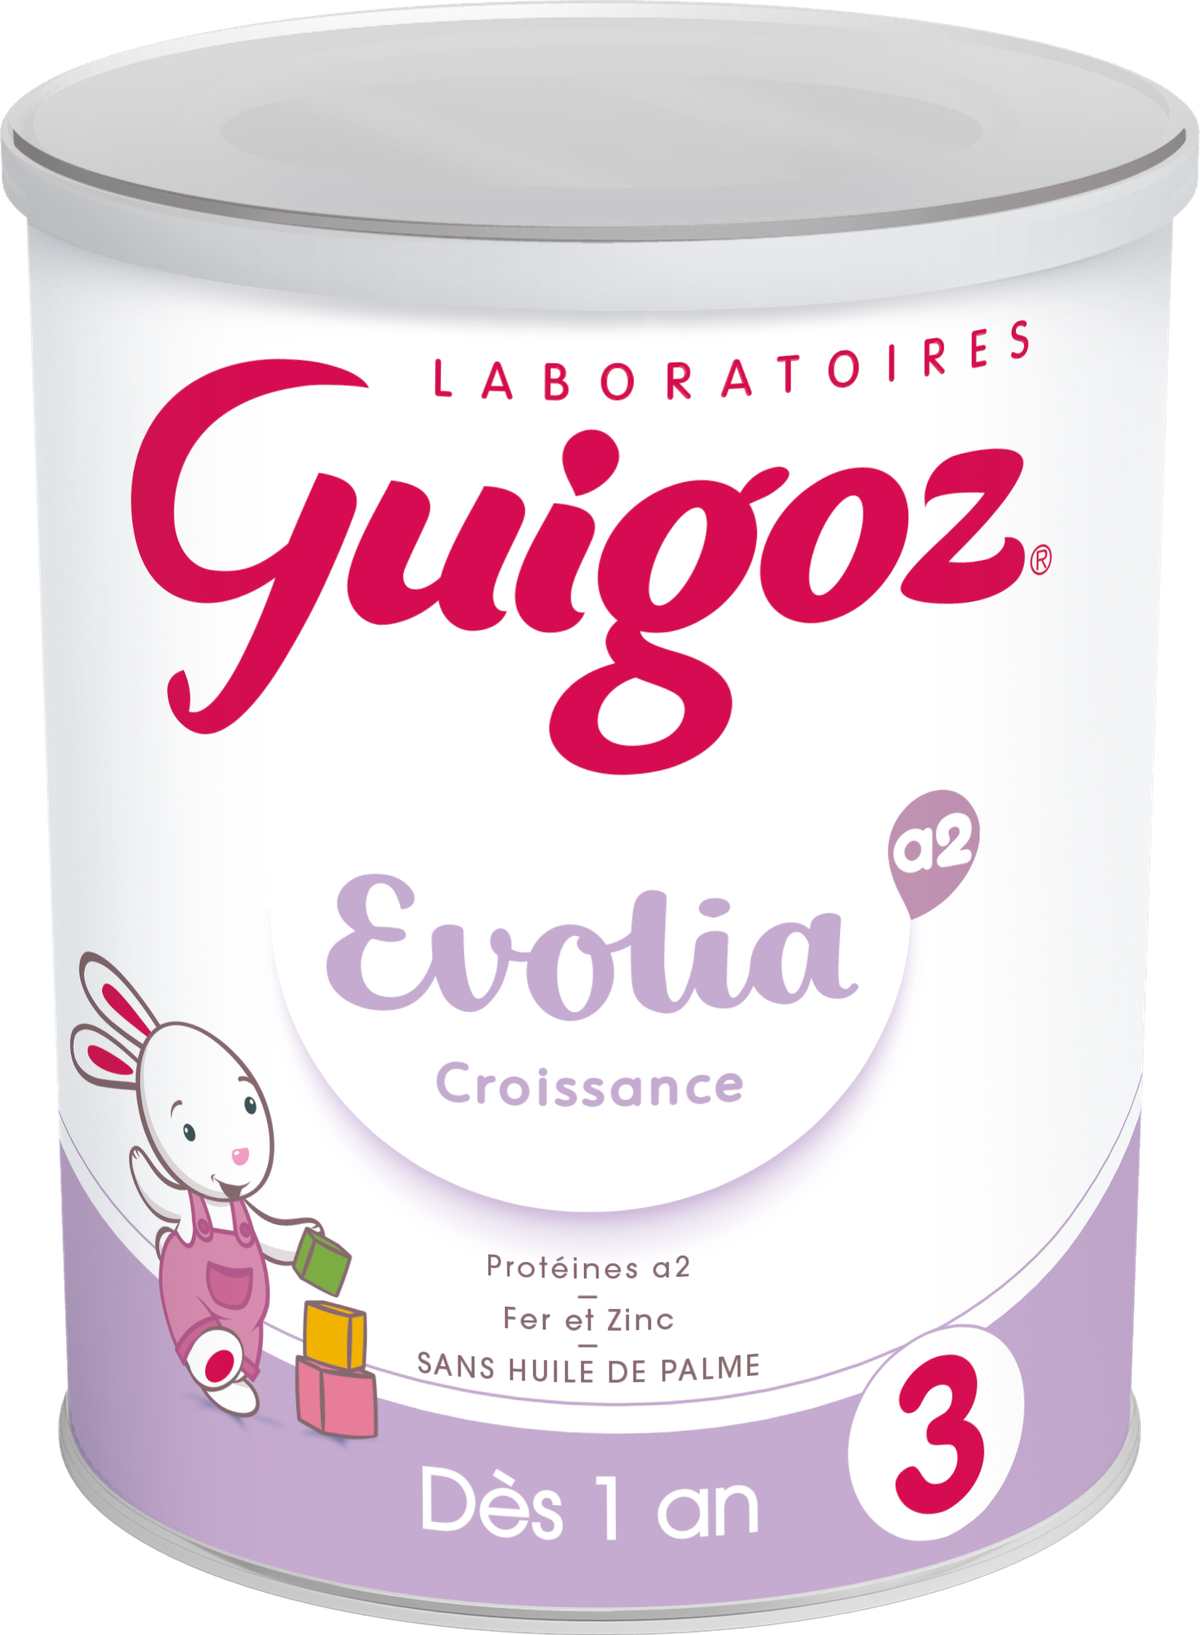 Evolia 3 - dès 1 an, Guigoz (800 g)